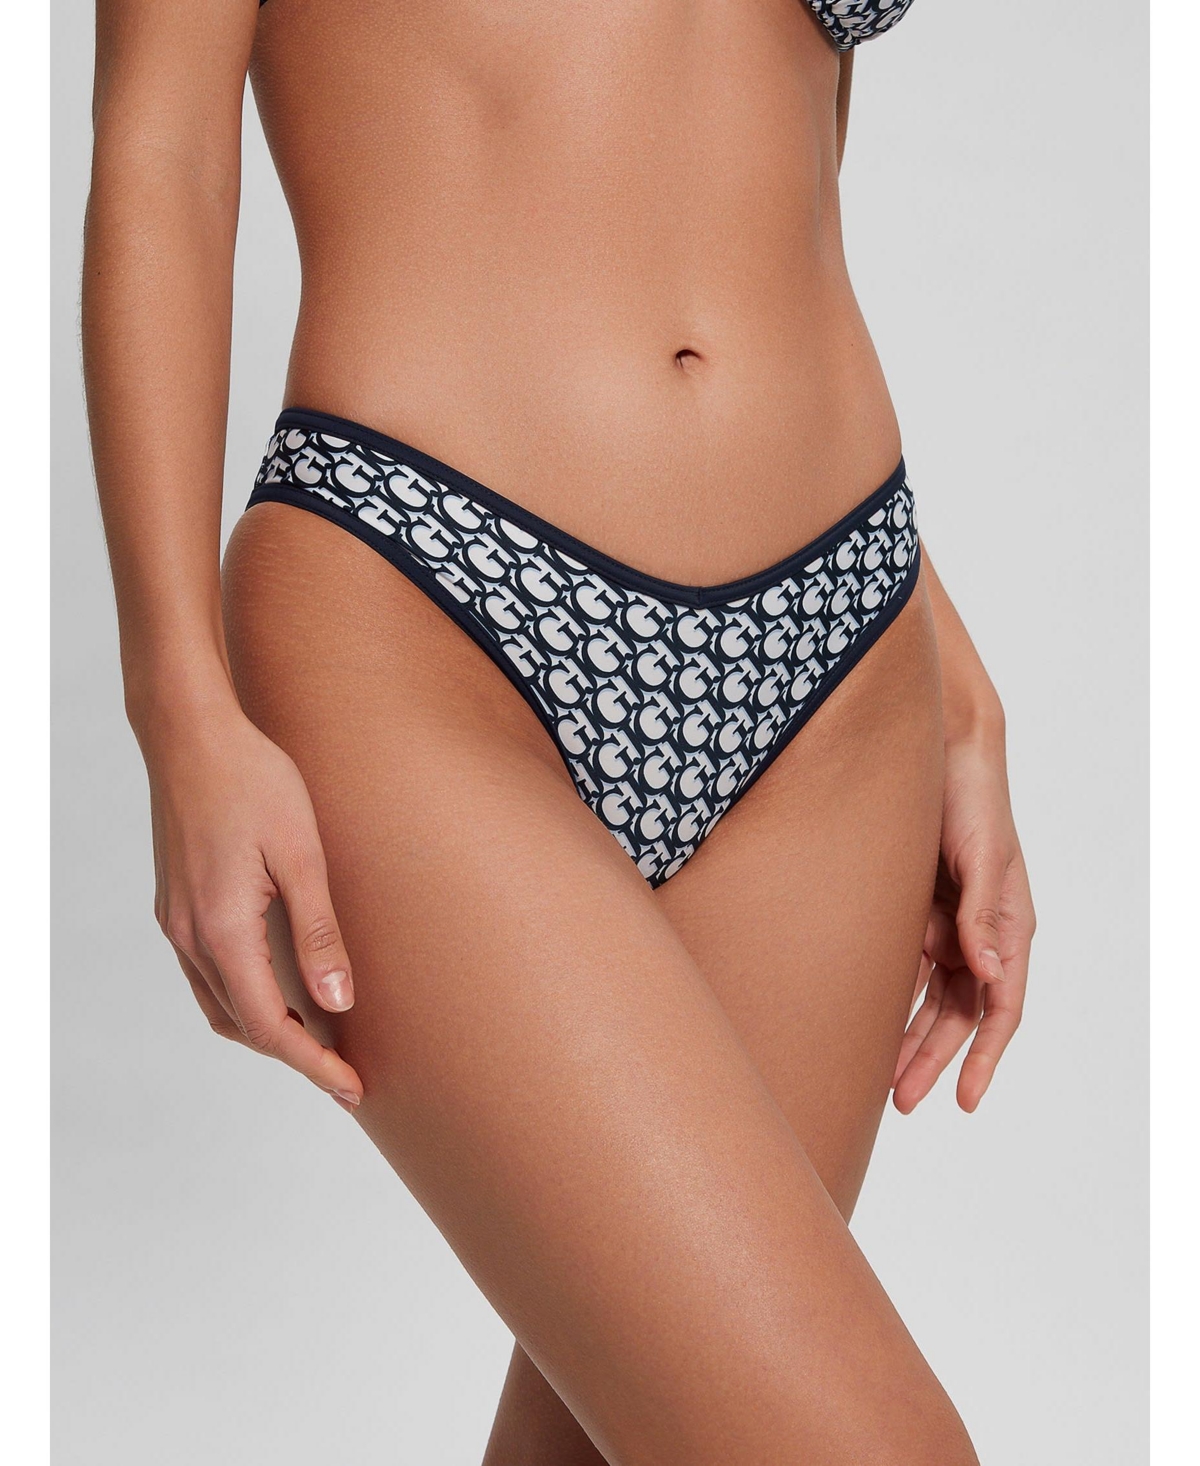 Women's Signature Brazilian Bikini Bottoms - Gj double layer blue